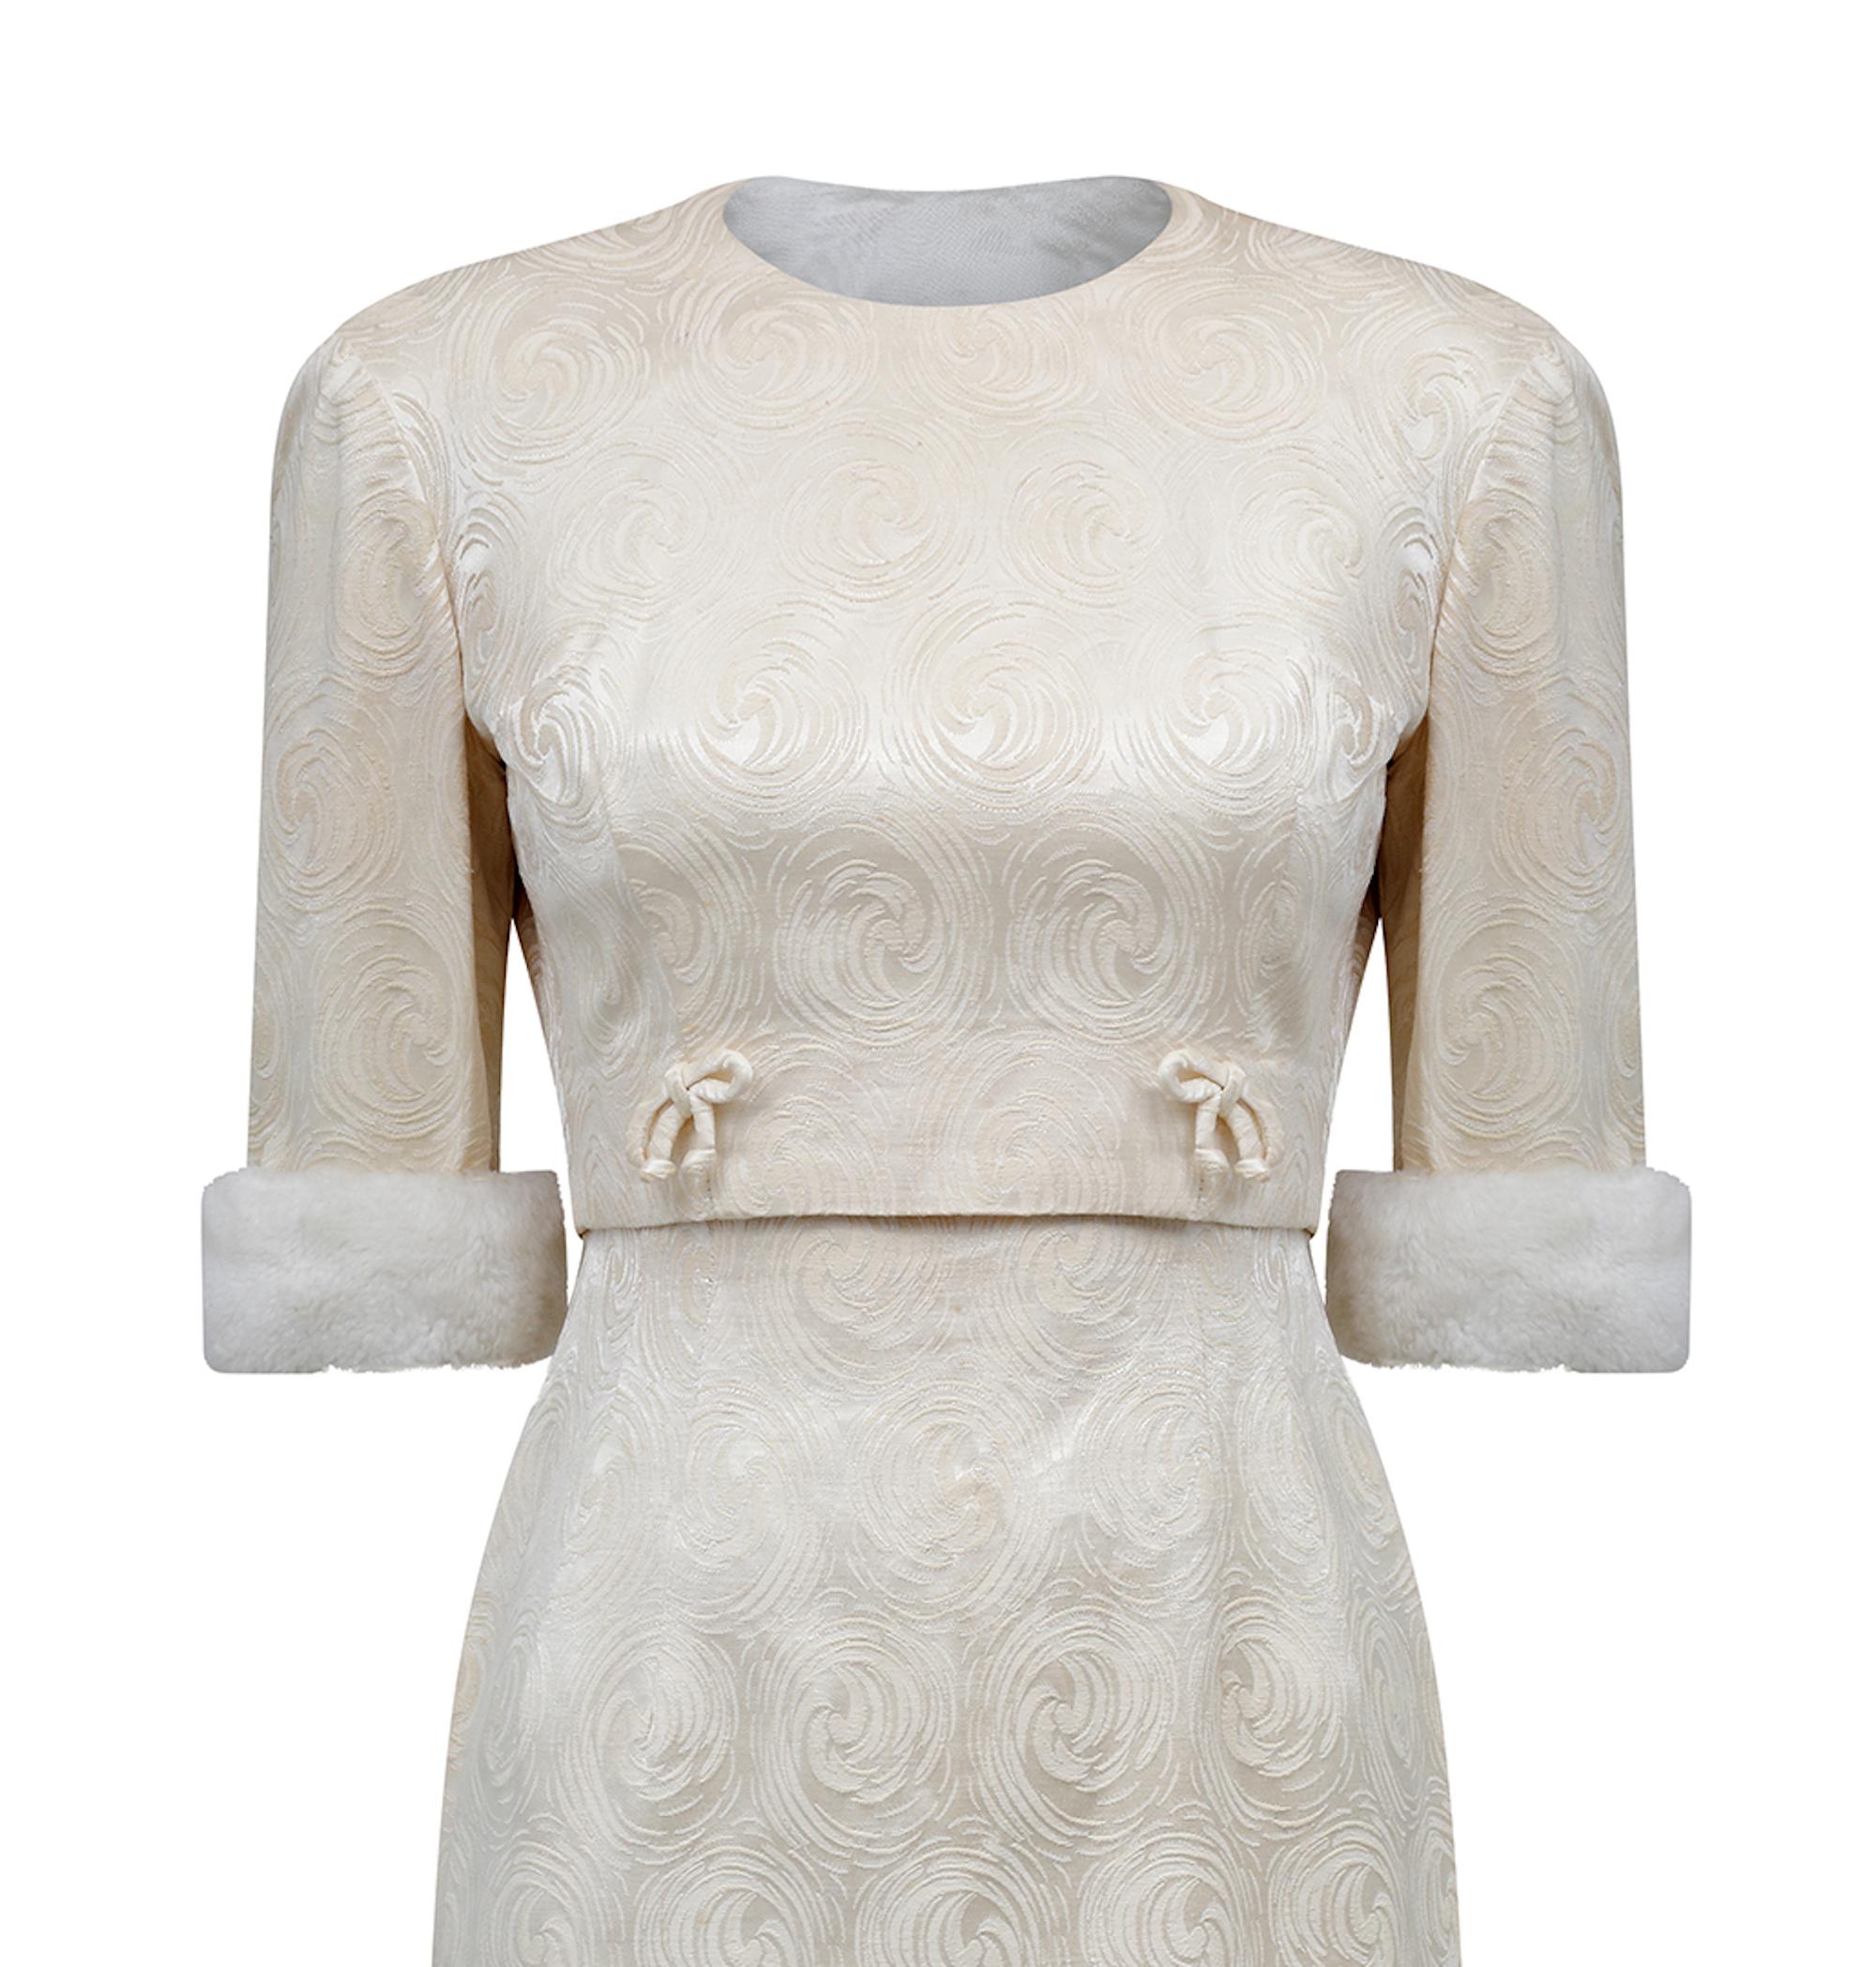 Gray 1960s Carol Brent Jackie Kennedy Style Ivory Brocade Dress Suit